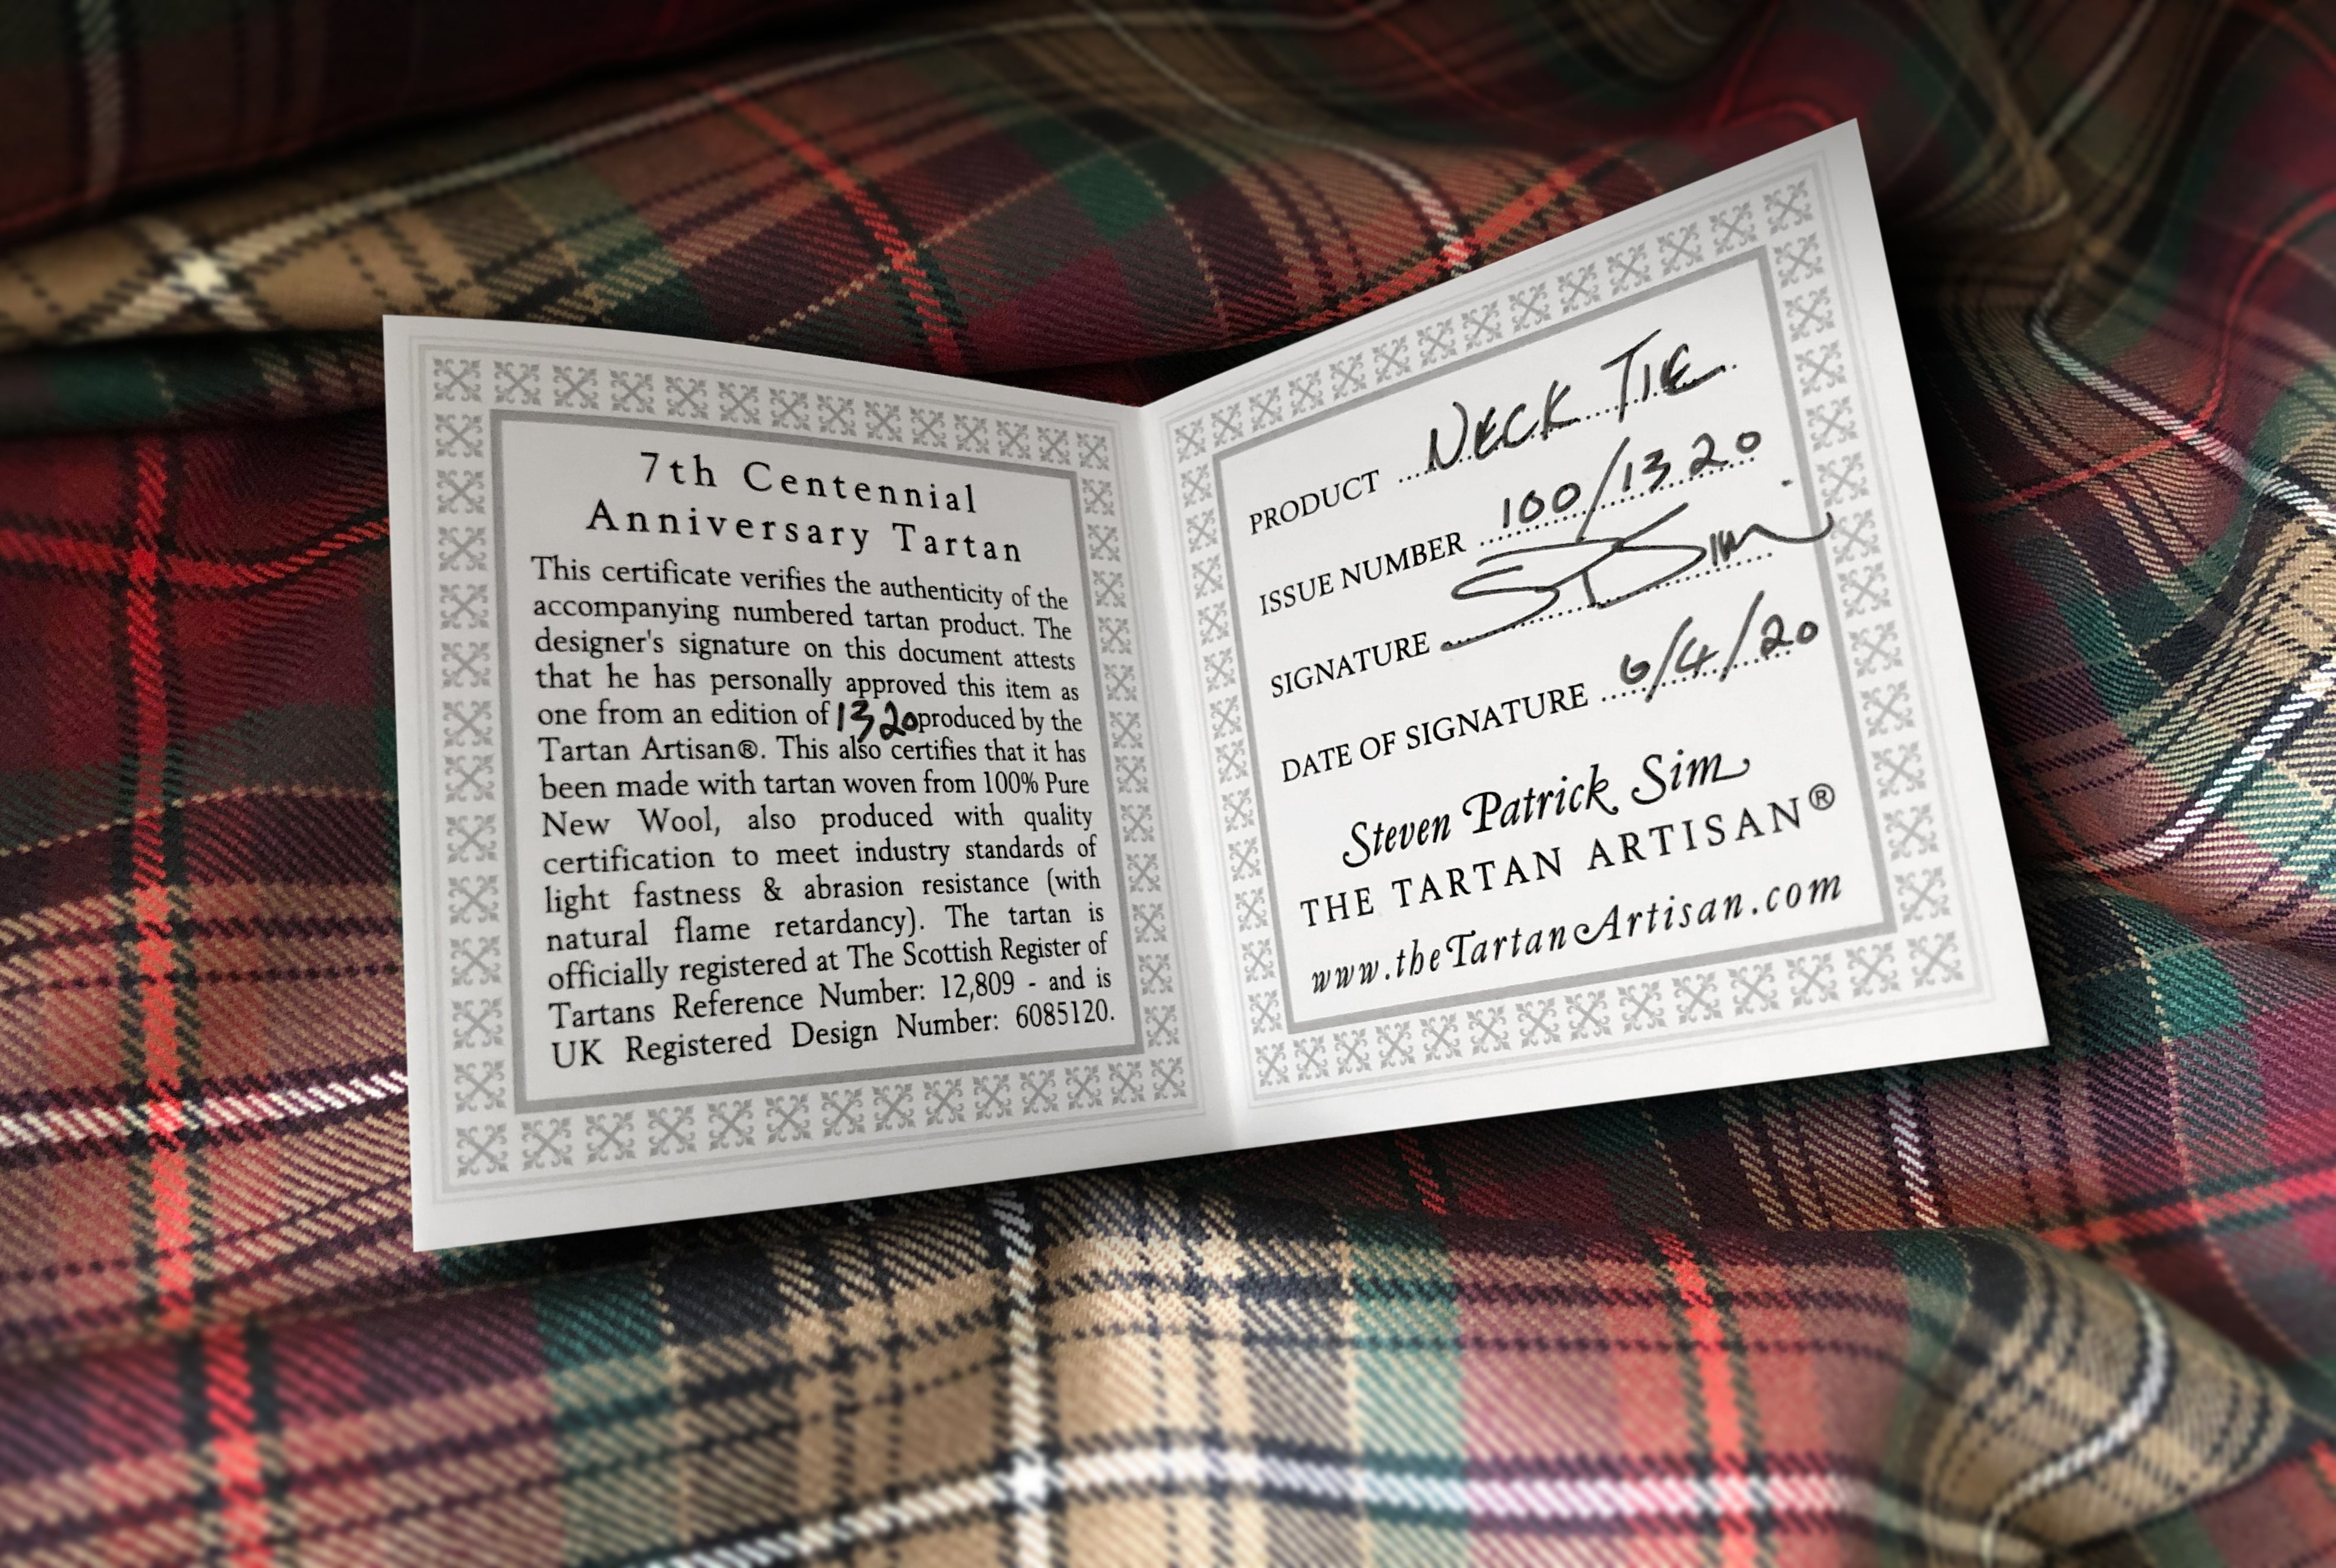 Declaration of Arbroath 7th Centennial - Tartan Tie - Numbered edition